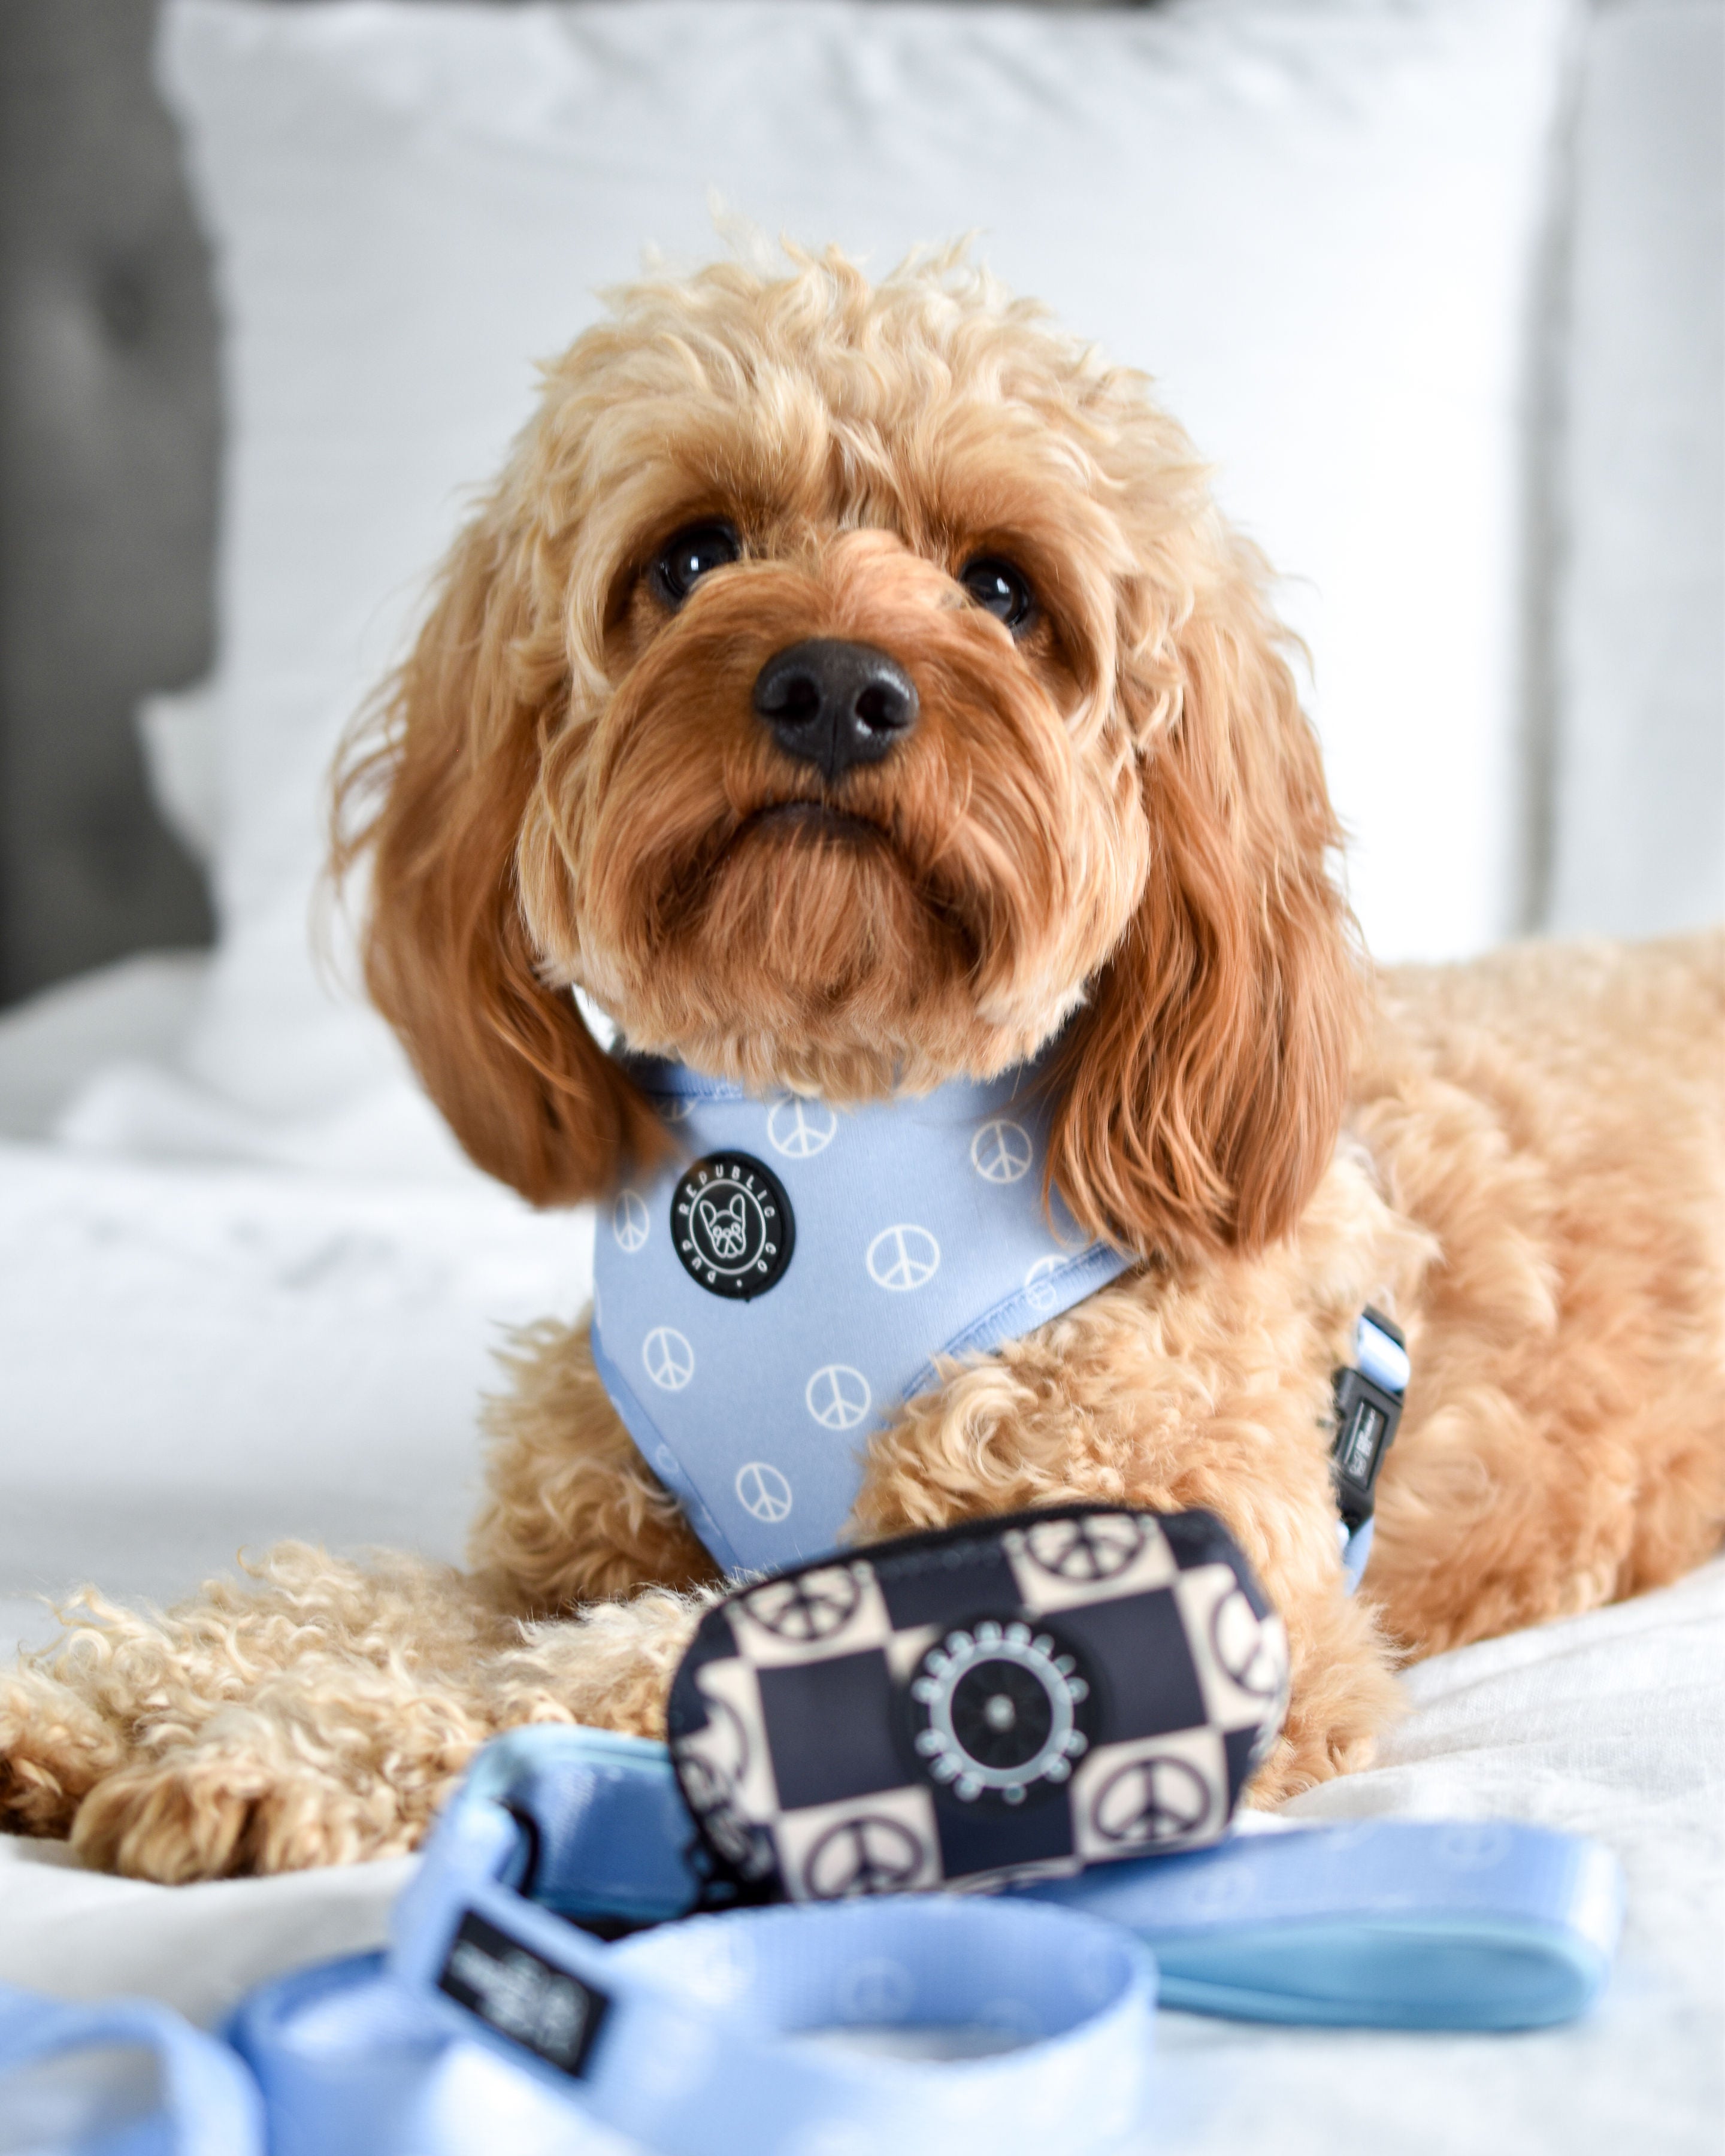 Peace &amp; Love - Reversible Dog Harness, Collar, Lead, Poop Bag &amp; Pet ID tag bundle